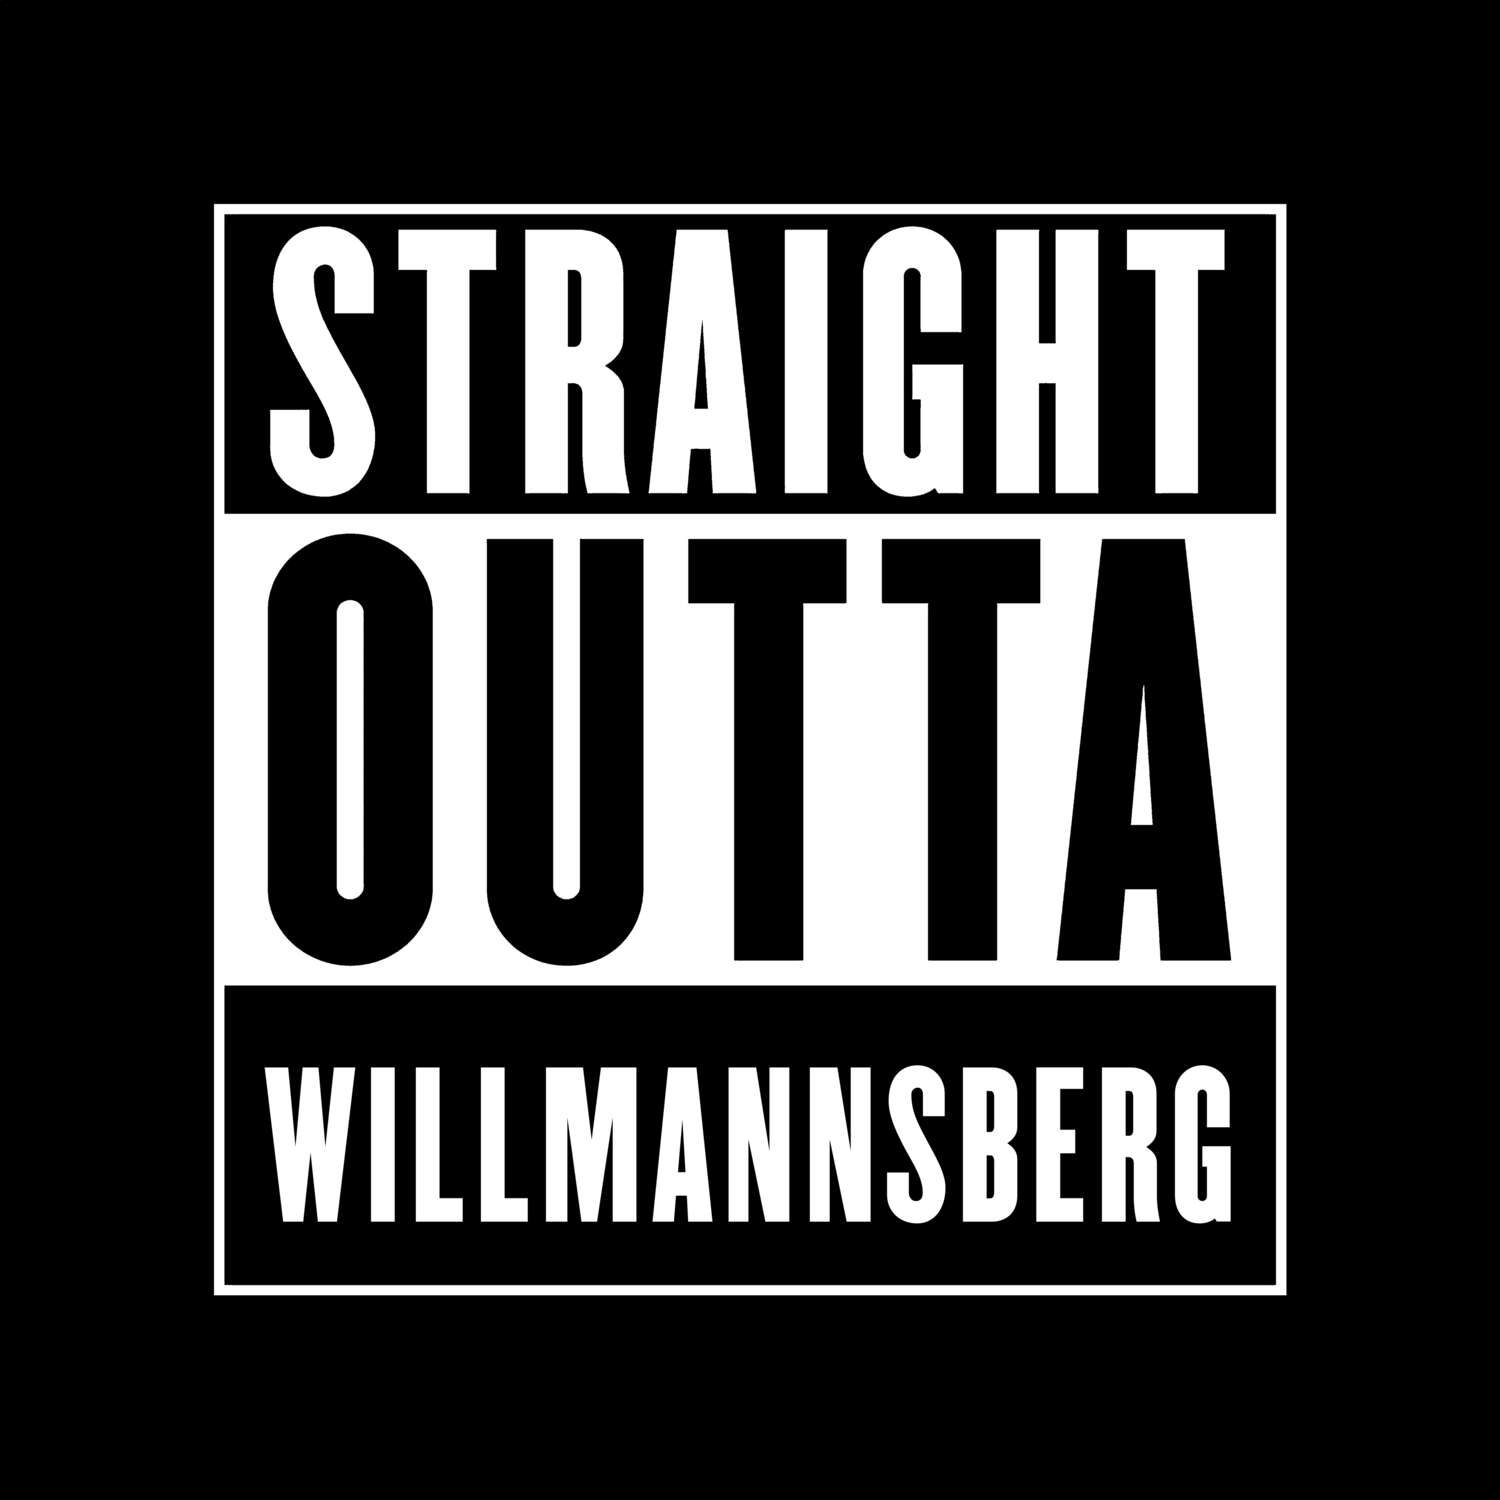 Willmannsberg T-Shirt »Straight Outta«